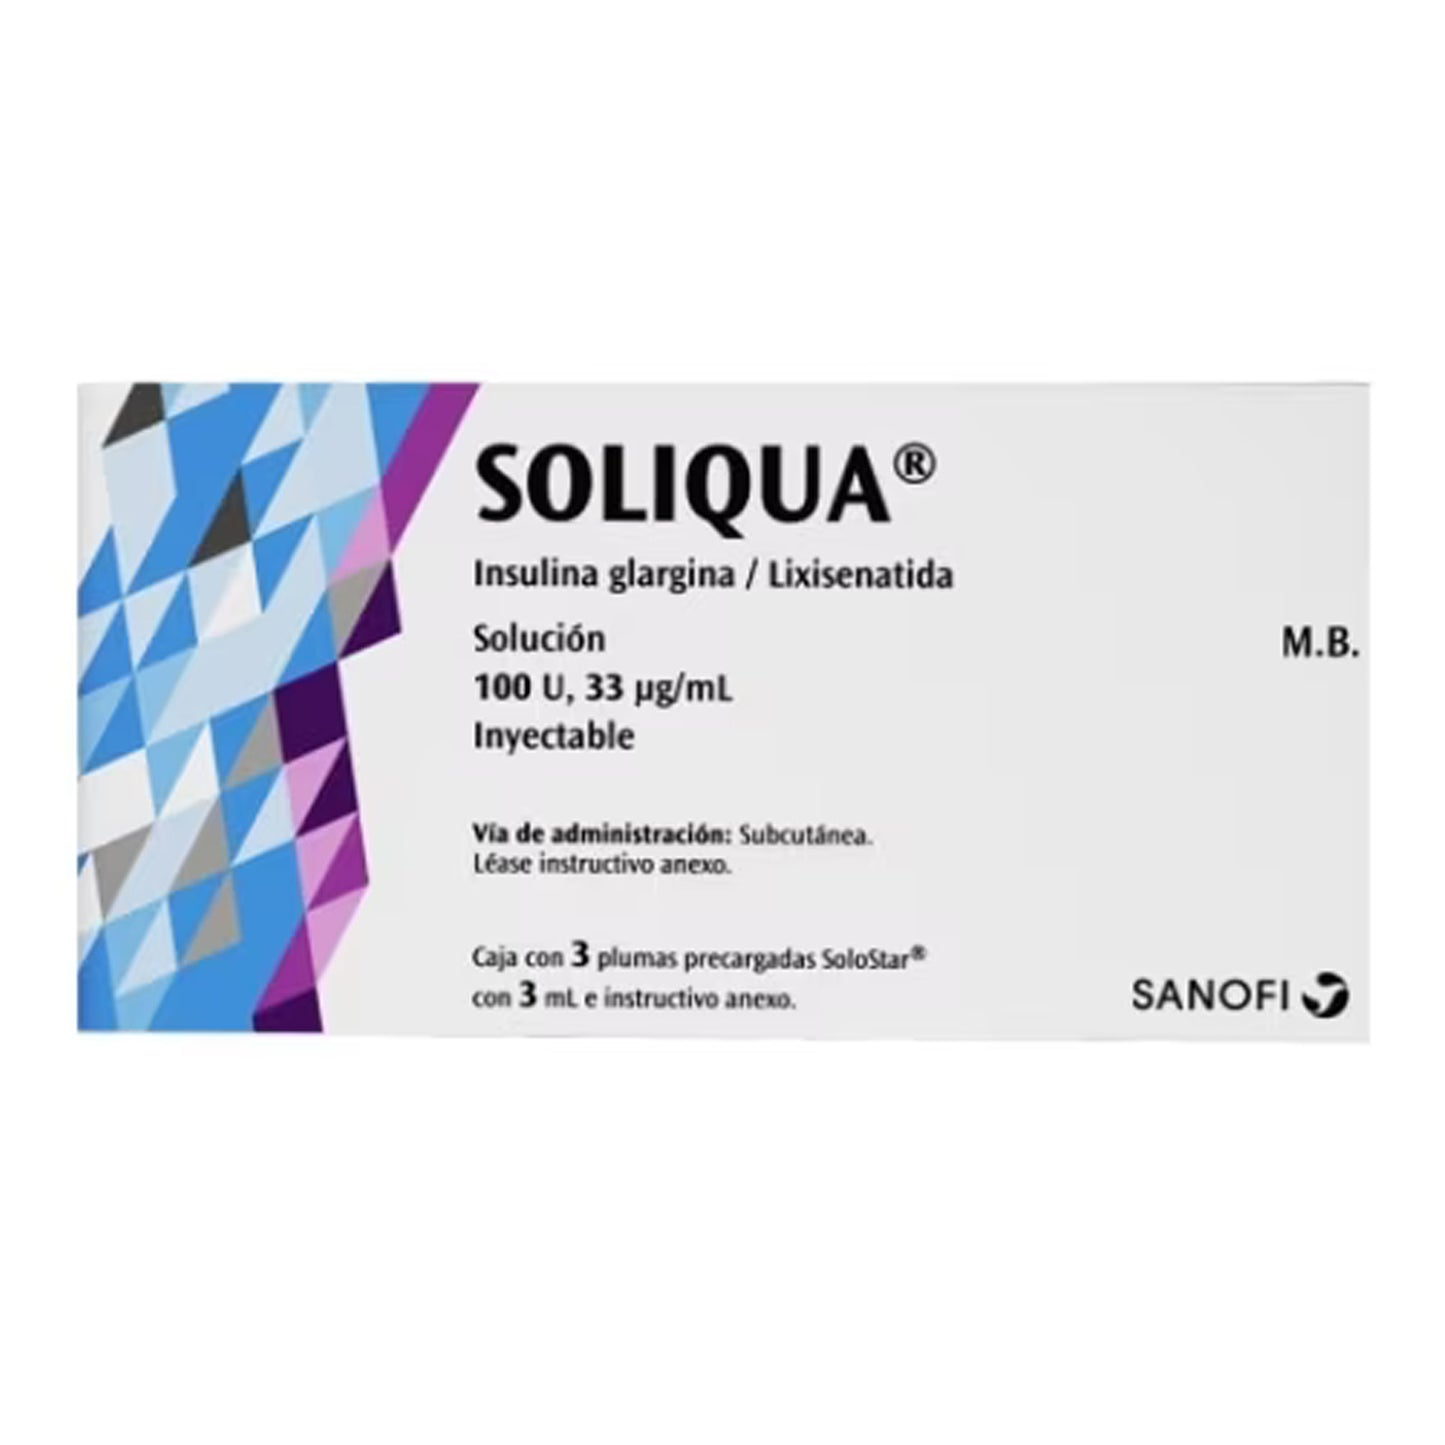 Soliqua Insulina Glargina/ Lixisenatida, 100 U, 33 μg/mL, 3 plumas precargada con 3 mL